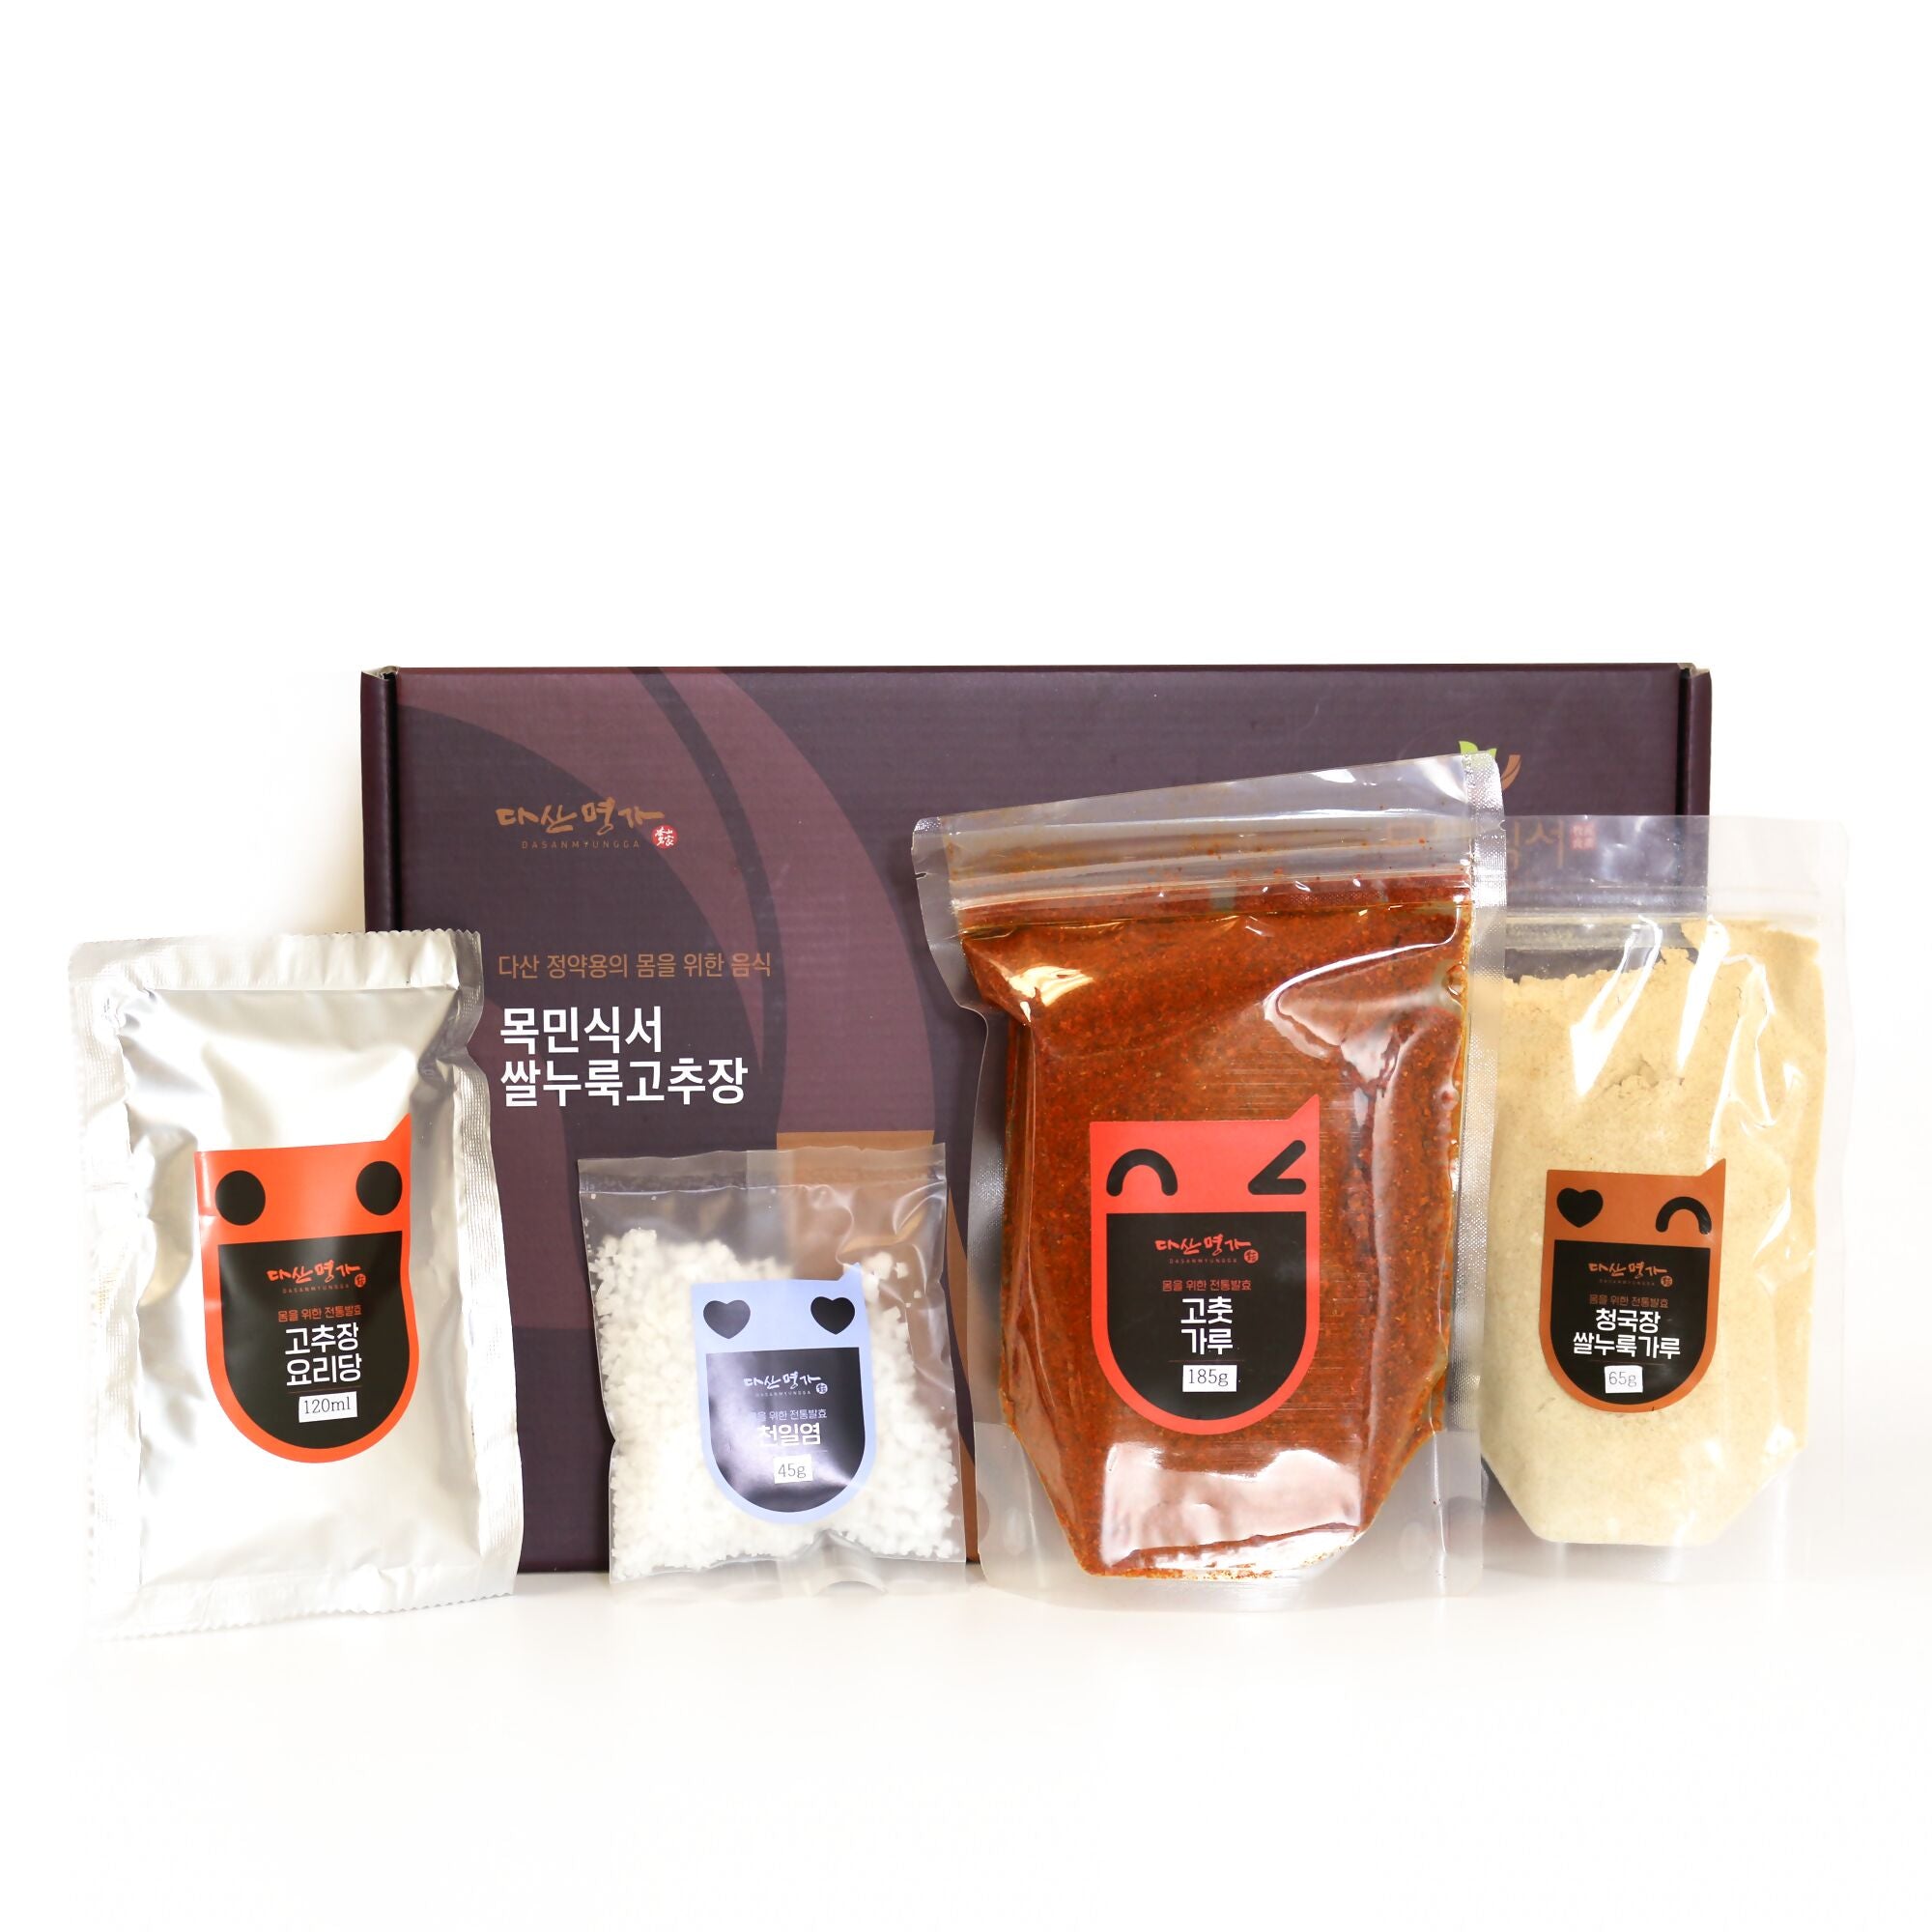 Korean Chili Paste DIY Kit (2 Box) | 다산명가 목민식서 쌀누룩고추장 DIY Kit - 나만의 고추장을 간편하게